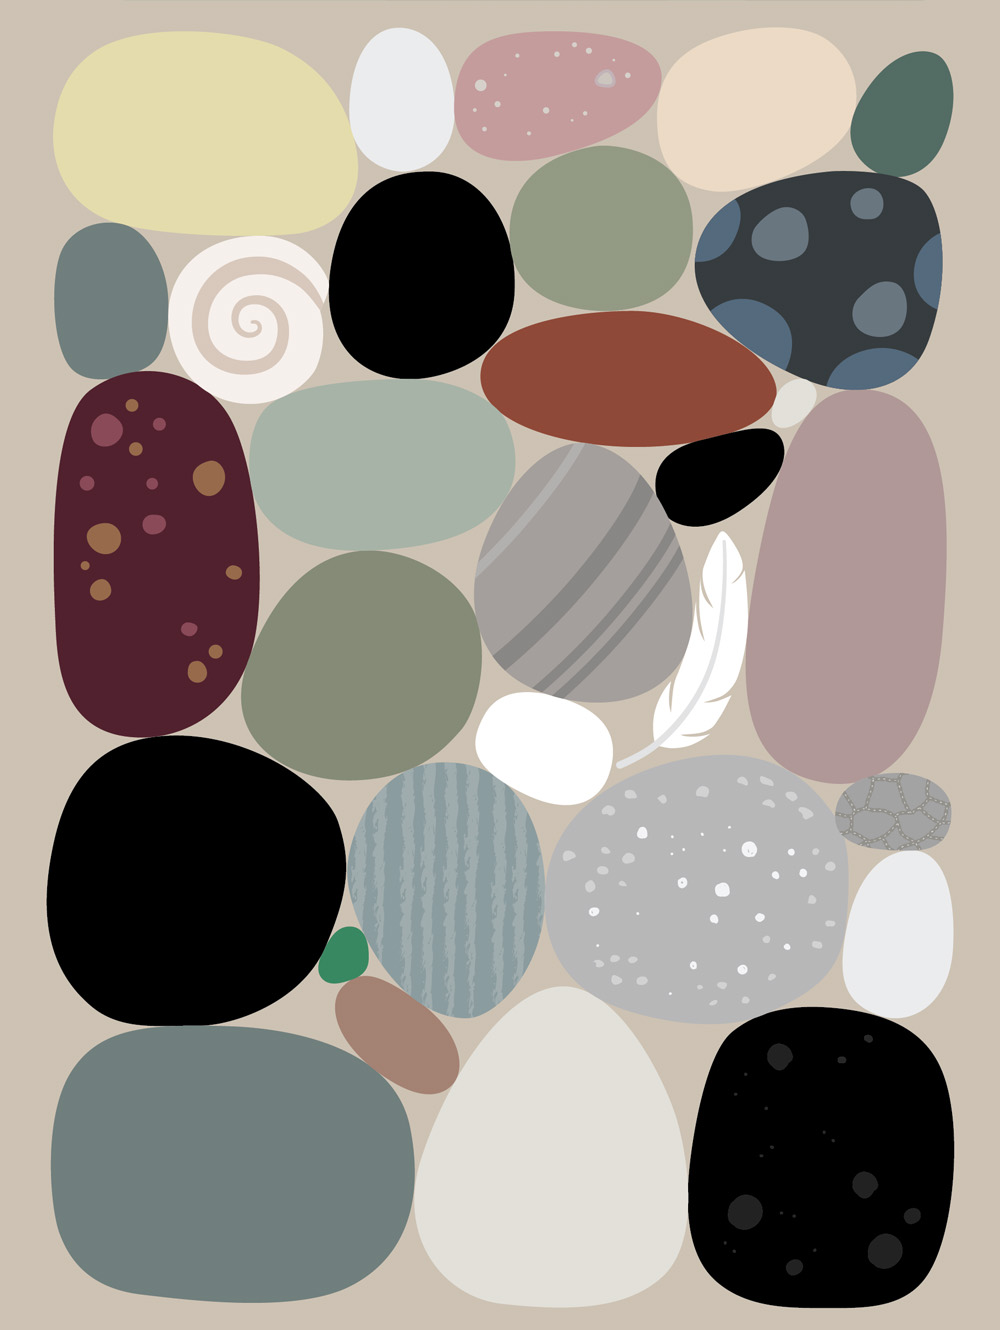 Stones illustration